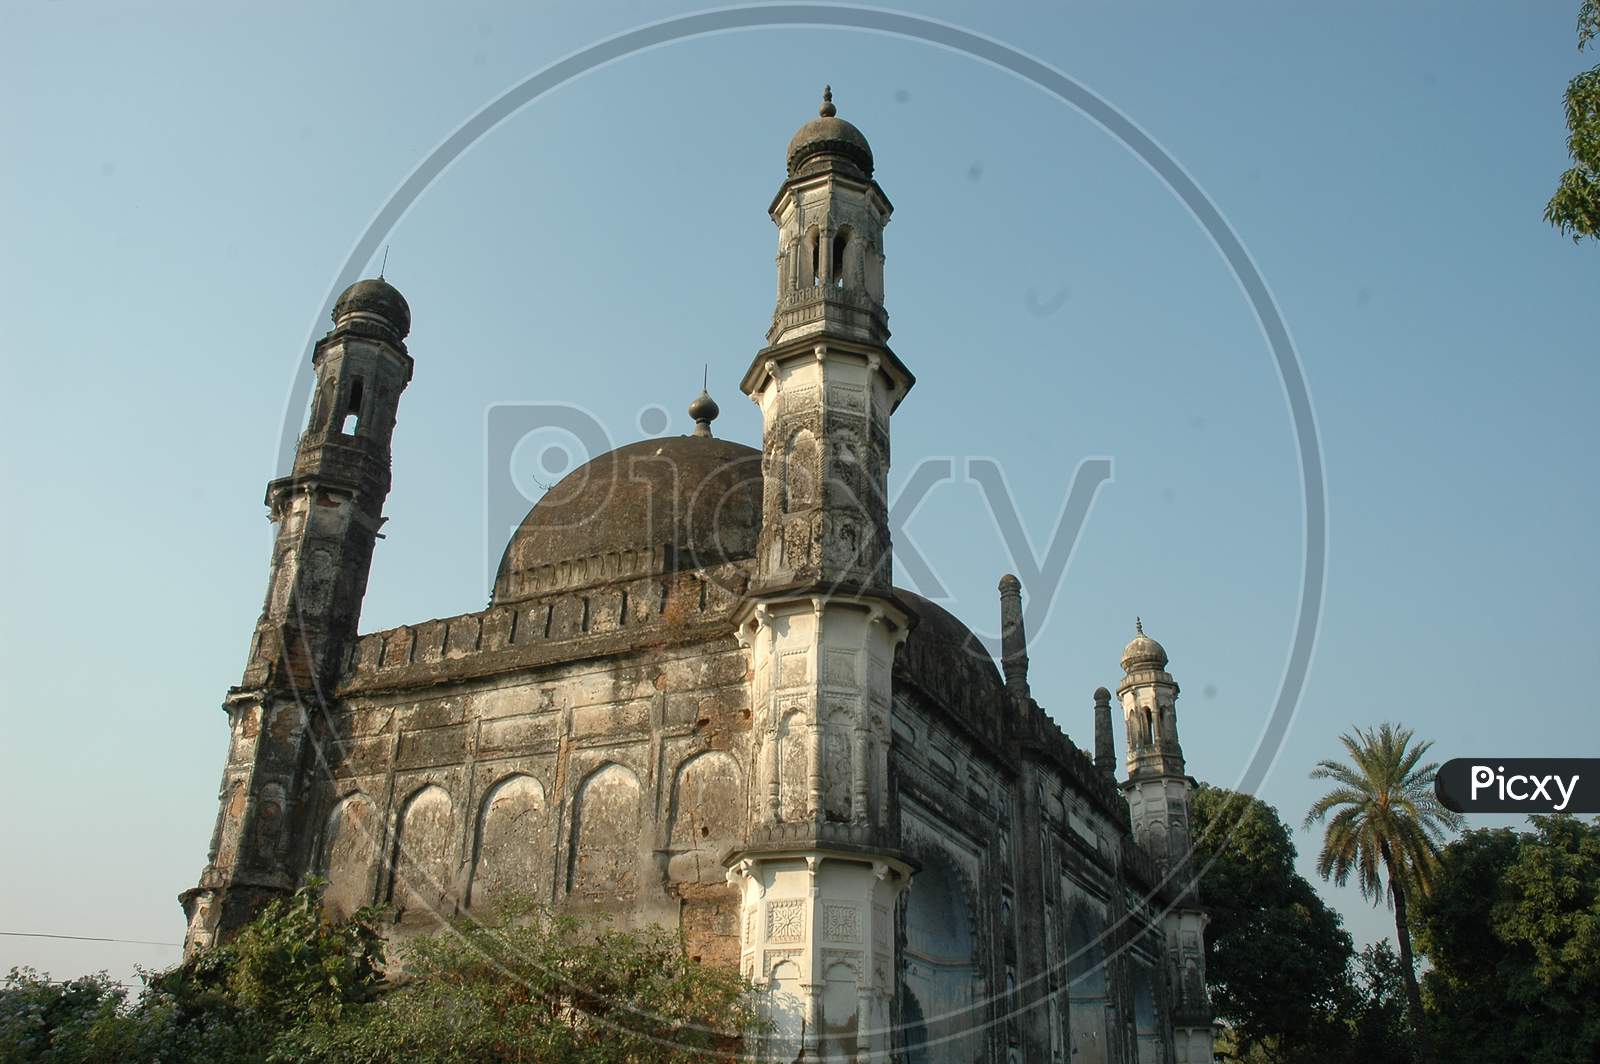 Old Ruins Of Katra Masjidh   In Murshidabad